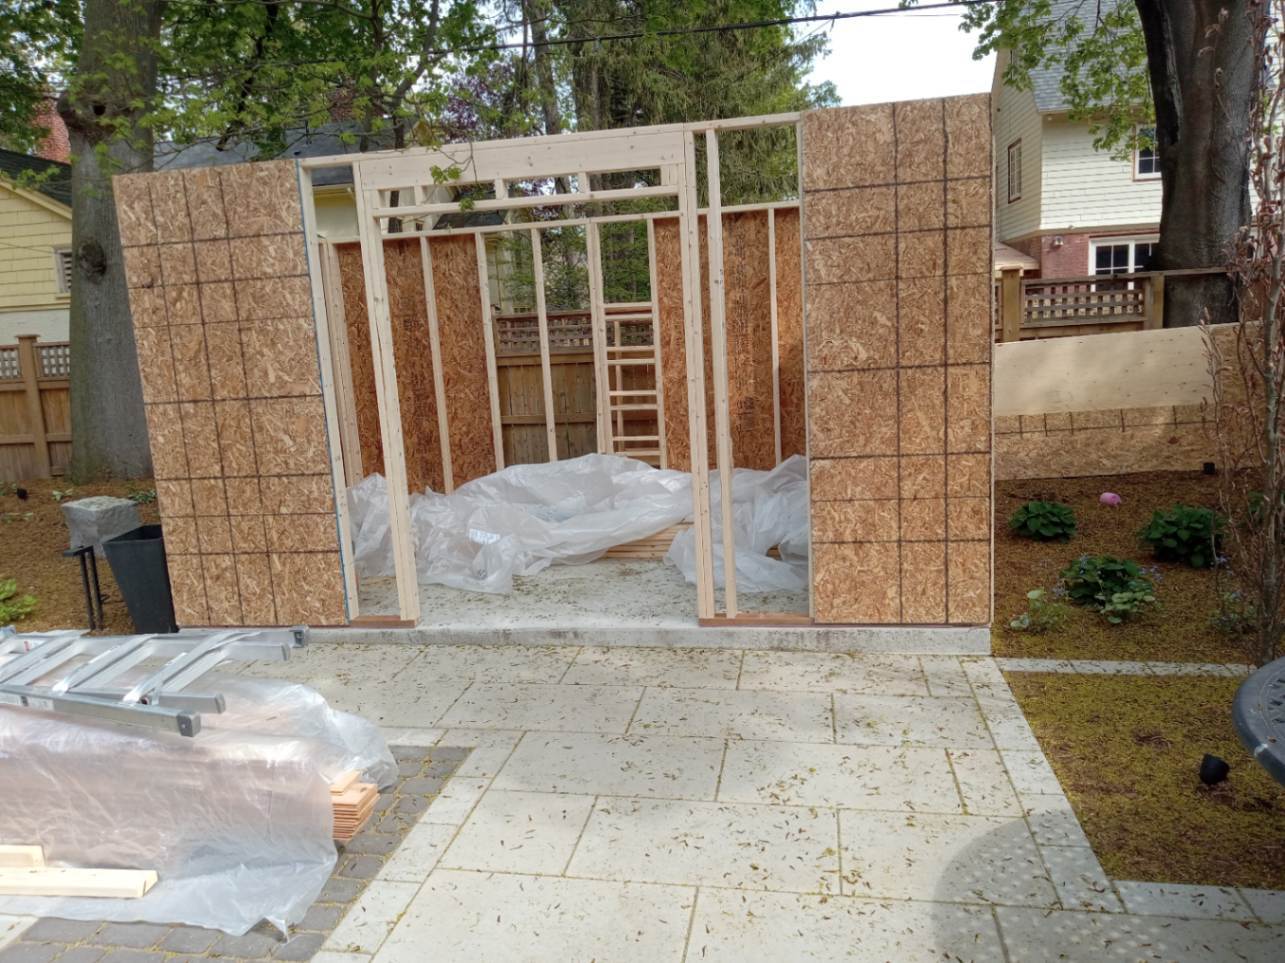 Construction view of 7’x14' Urban Studio Home Studio located in Oakville, Ontario – Summerwood P